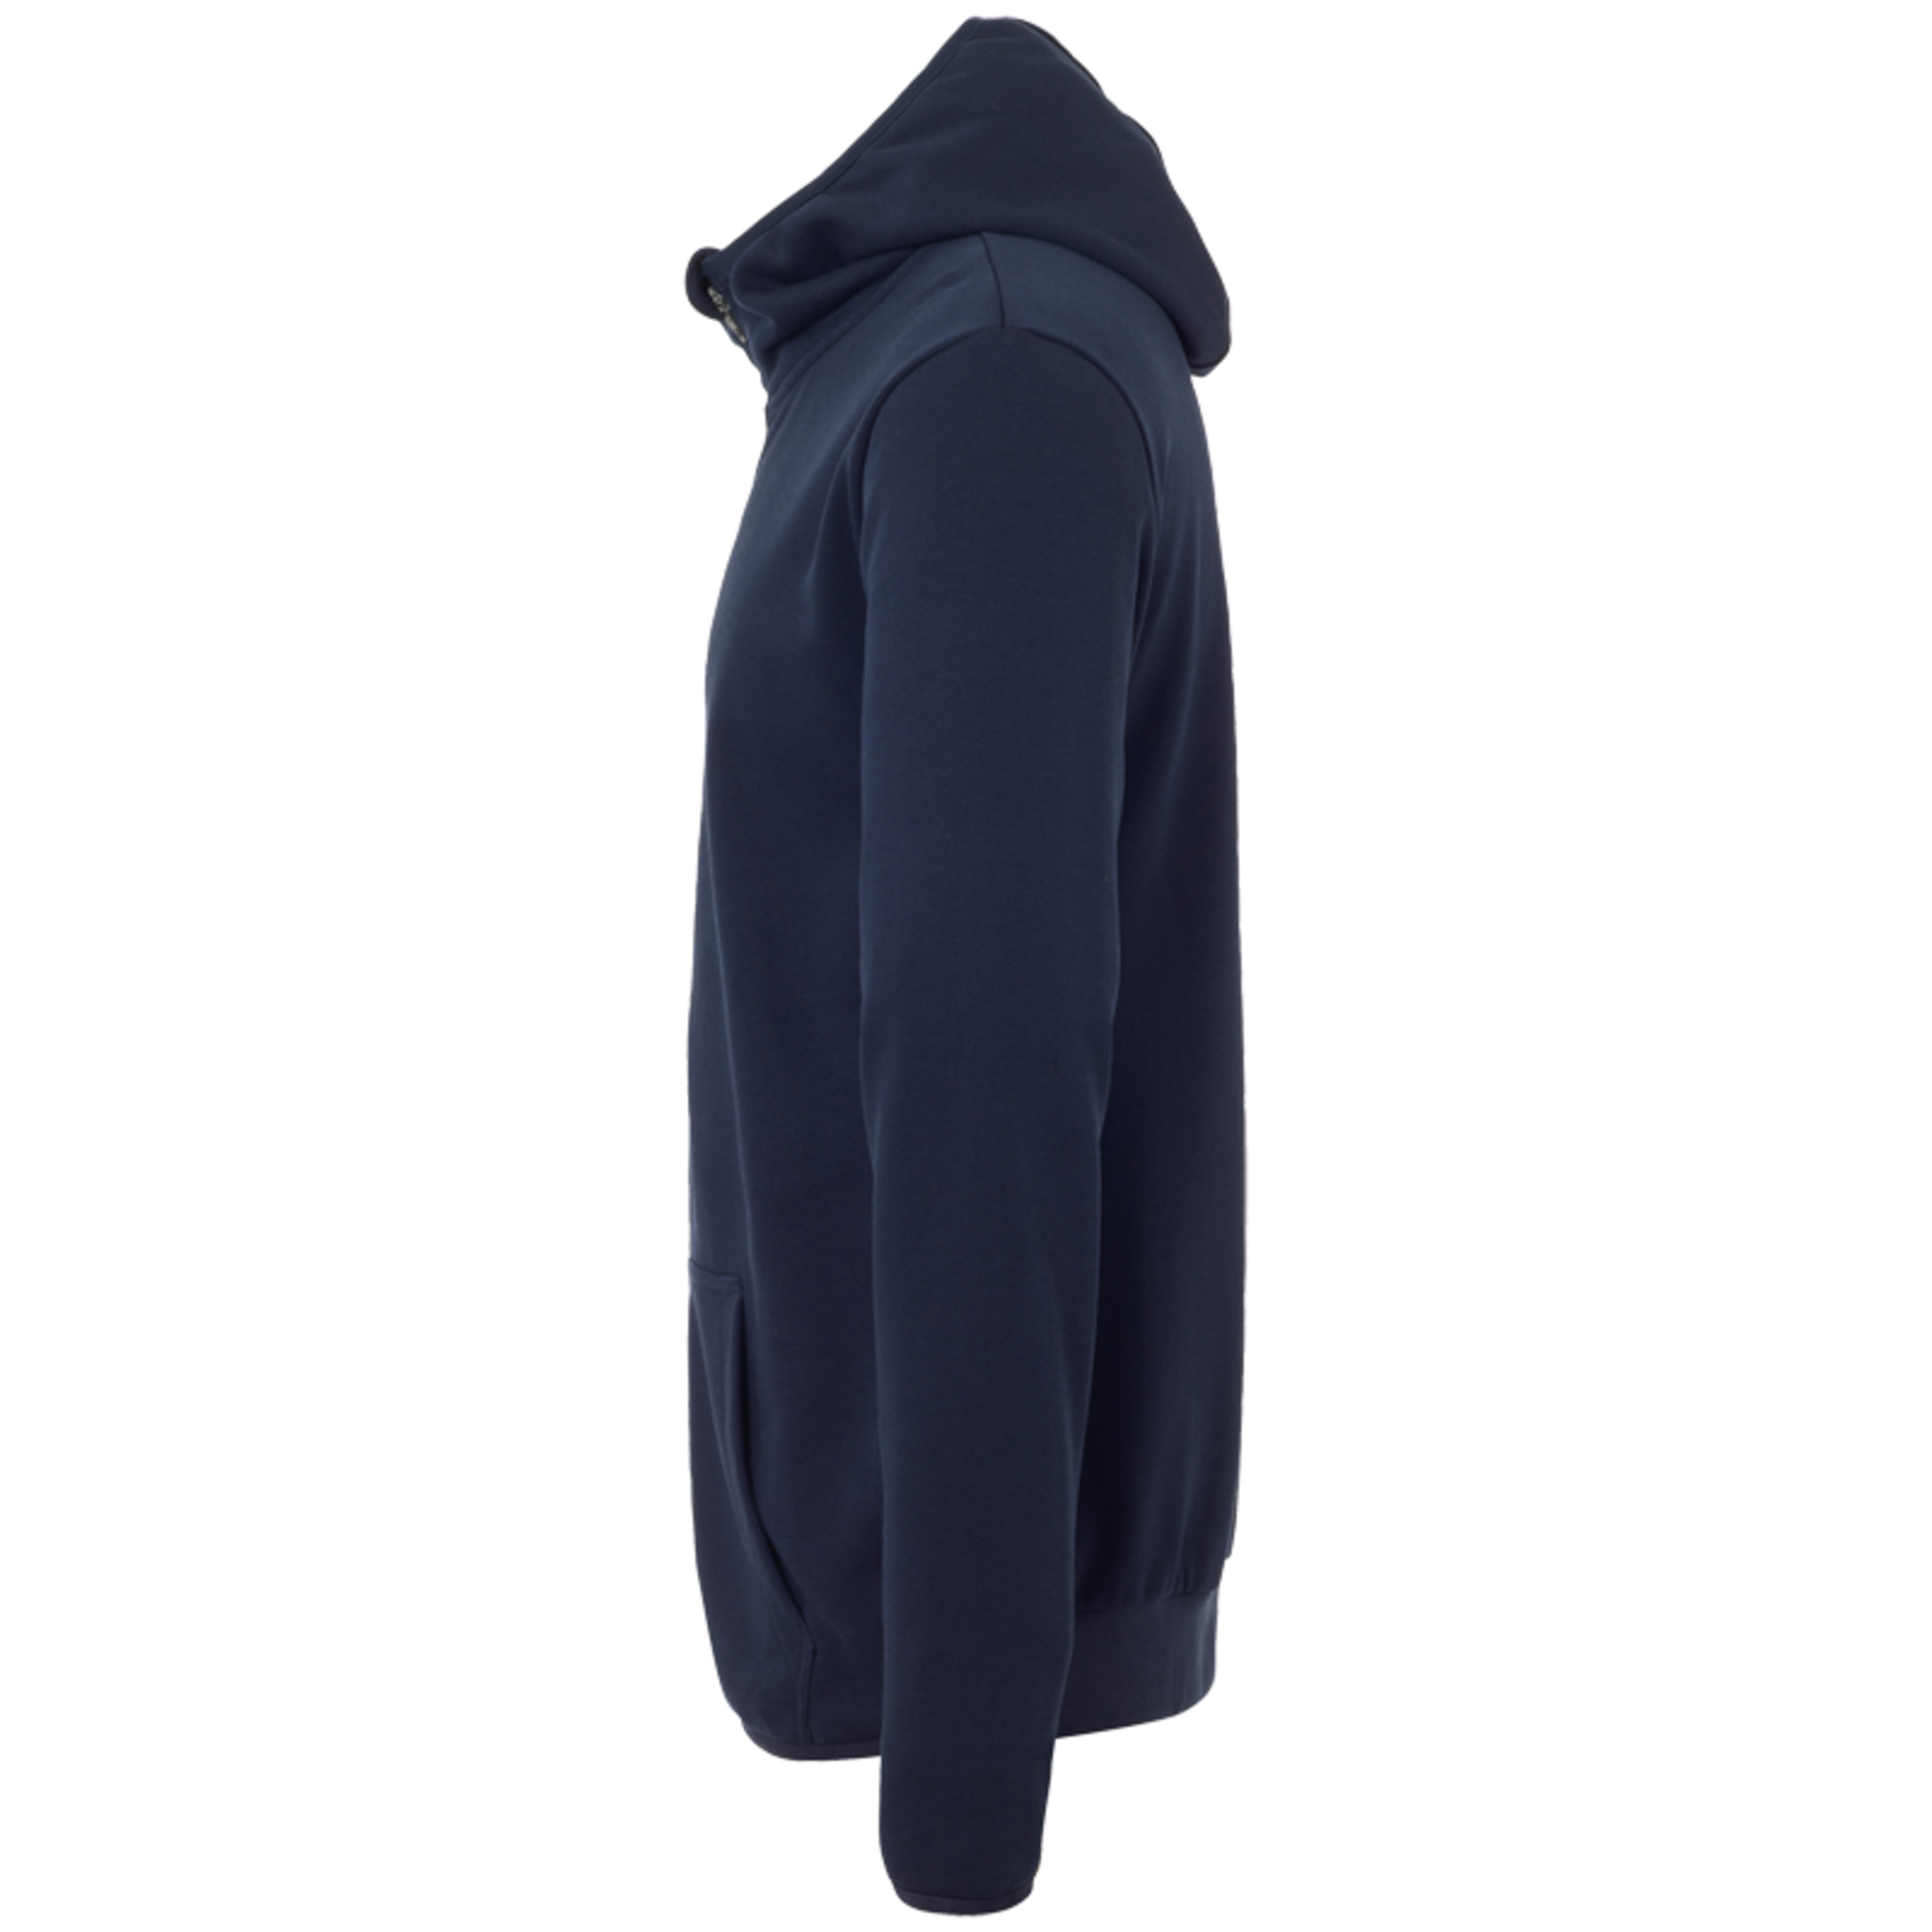 Essential Hood Jacket Blue Uhlsport